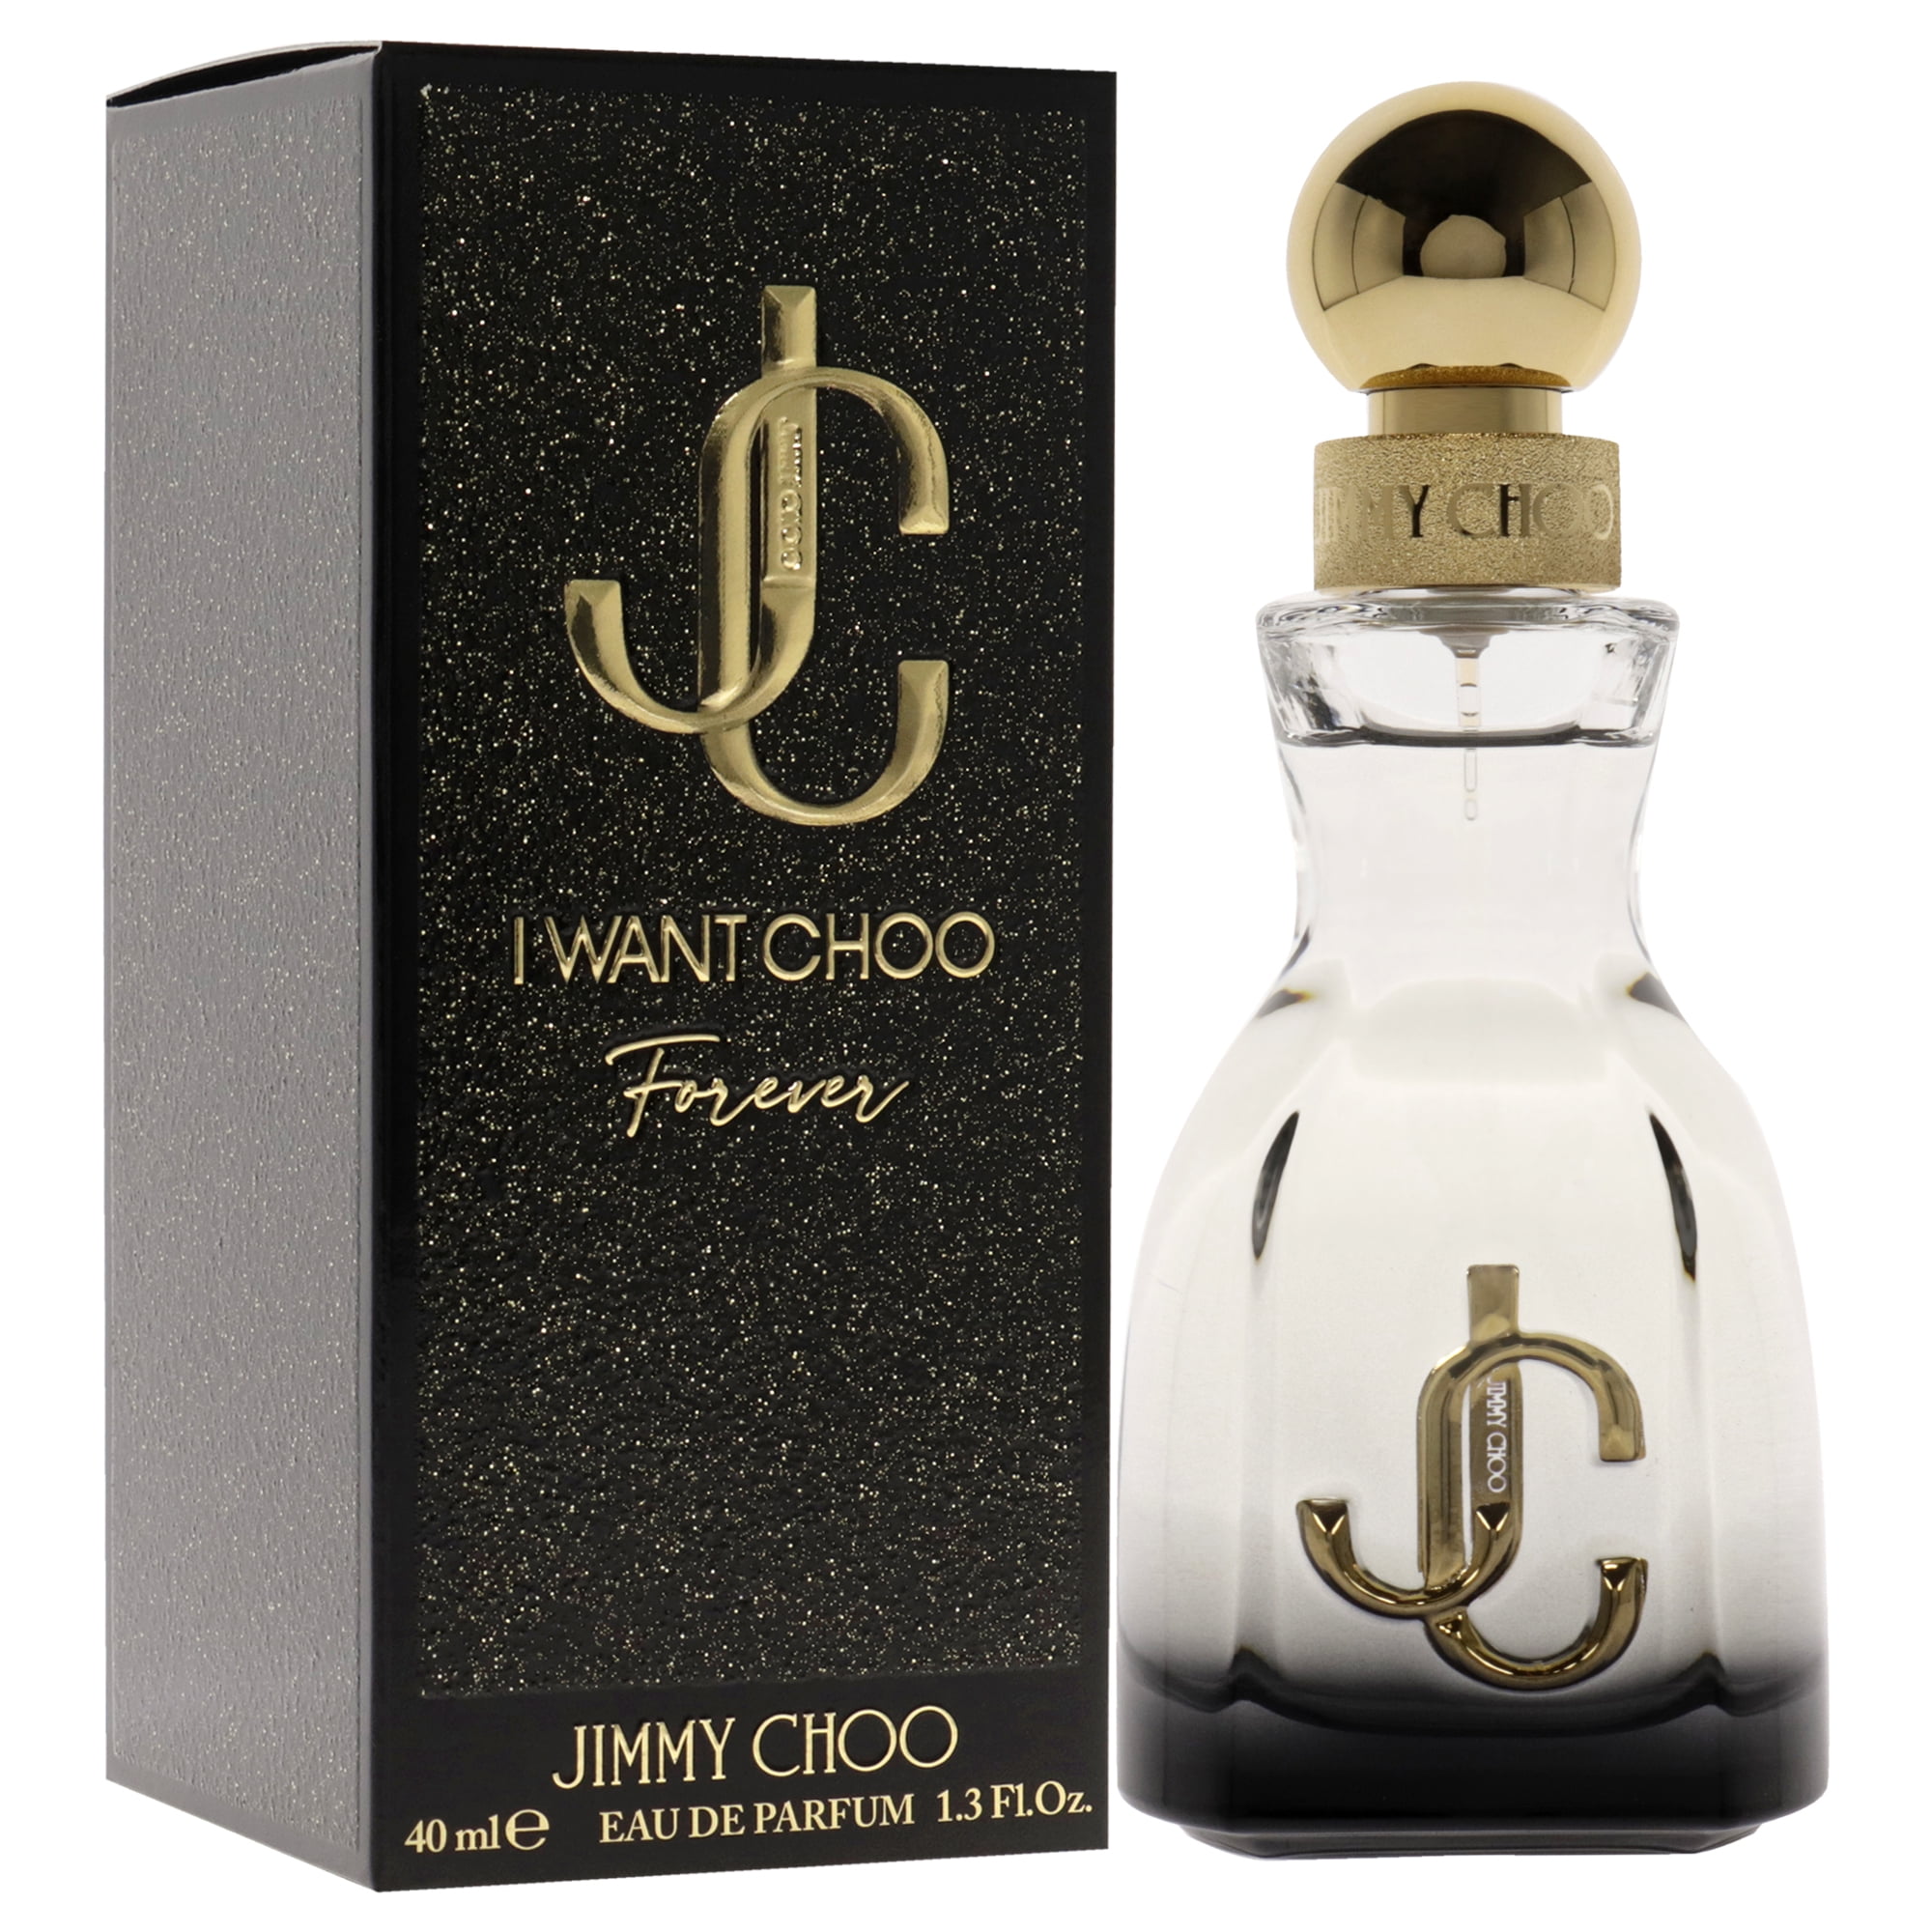 Jimmy Choo I Want Choo 2 oz Eau de Parfum Spray